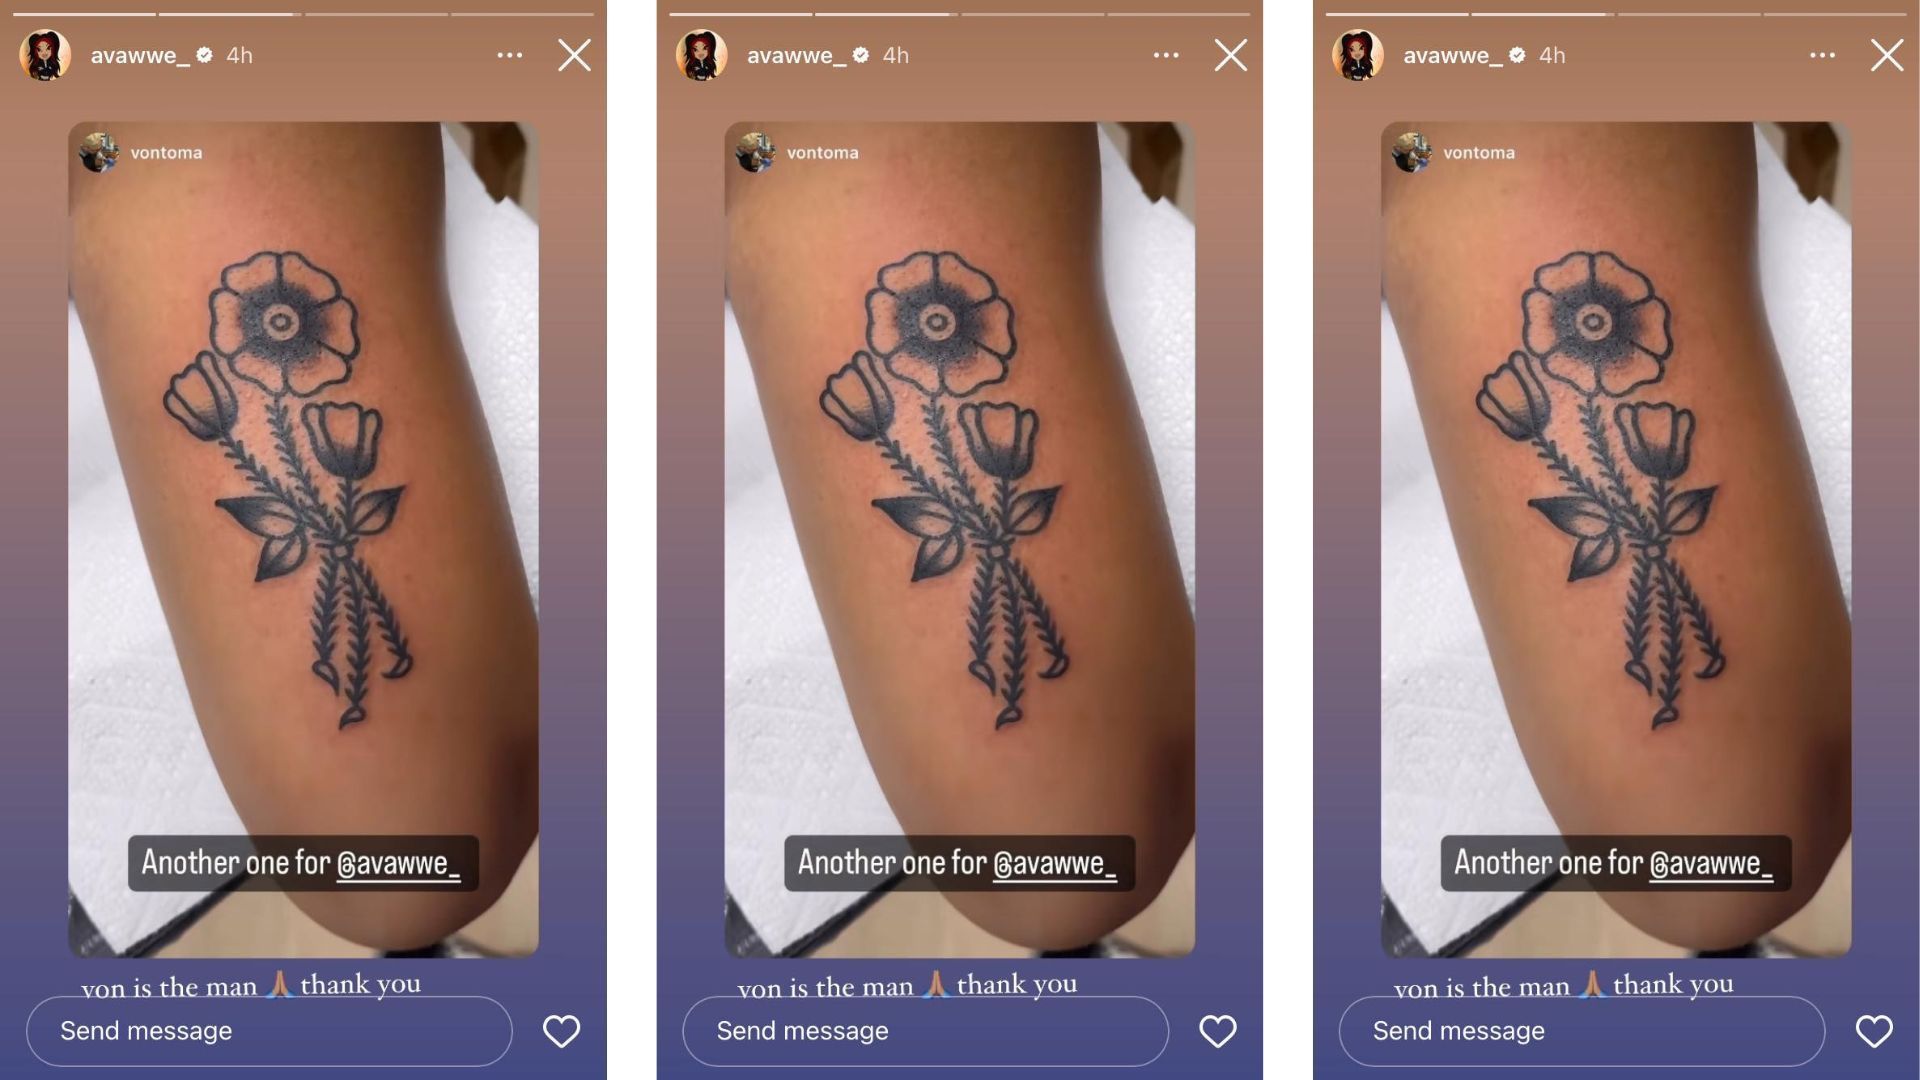 Ava shares new tattoo on Instagram.